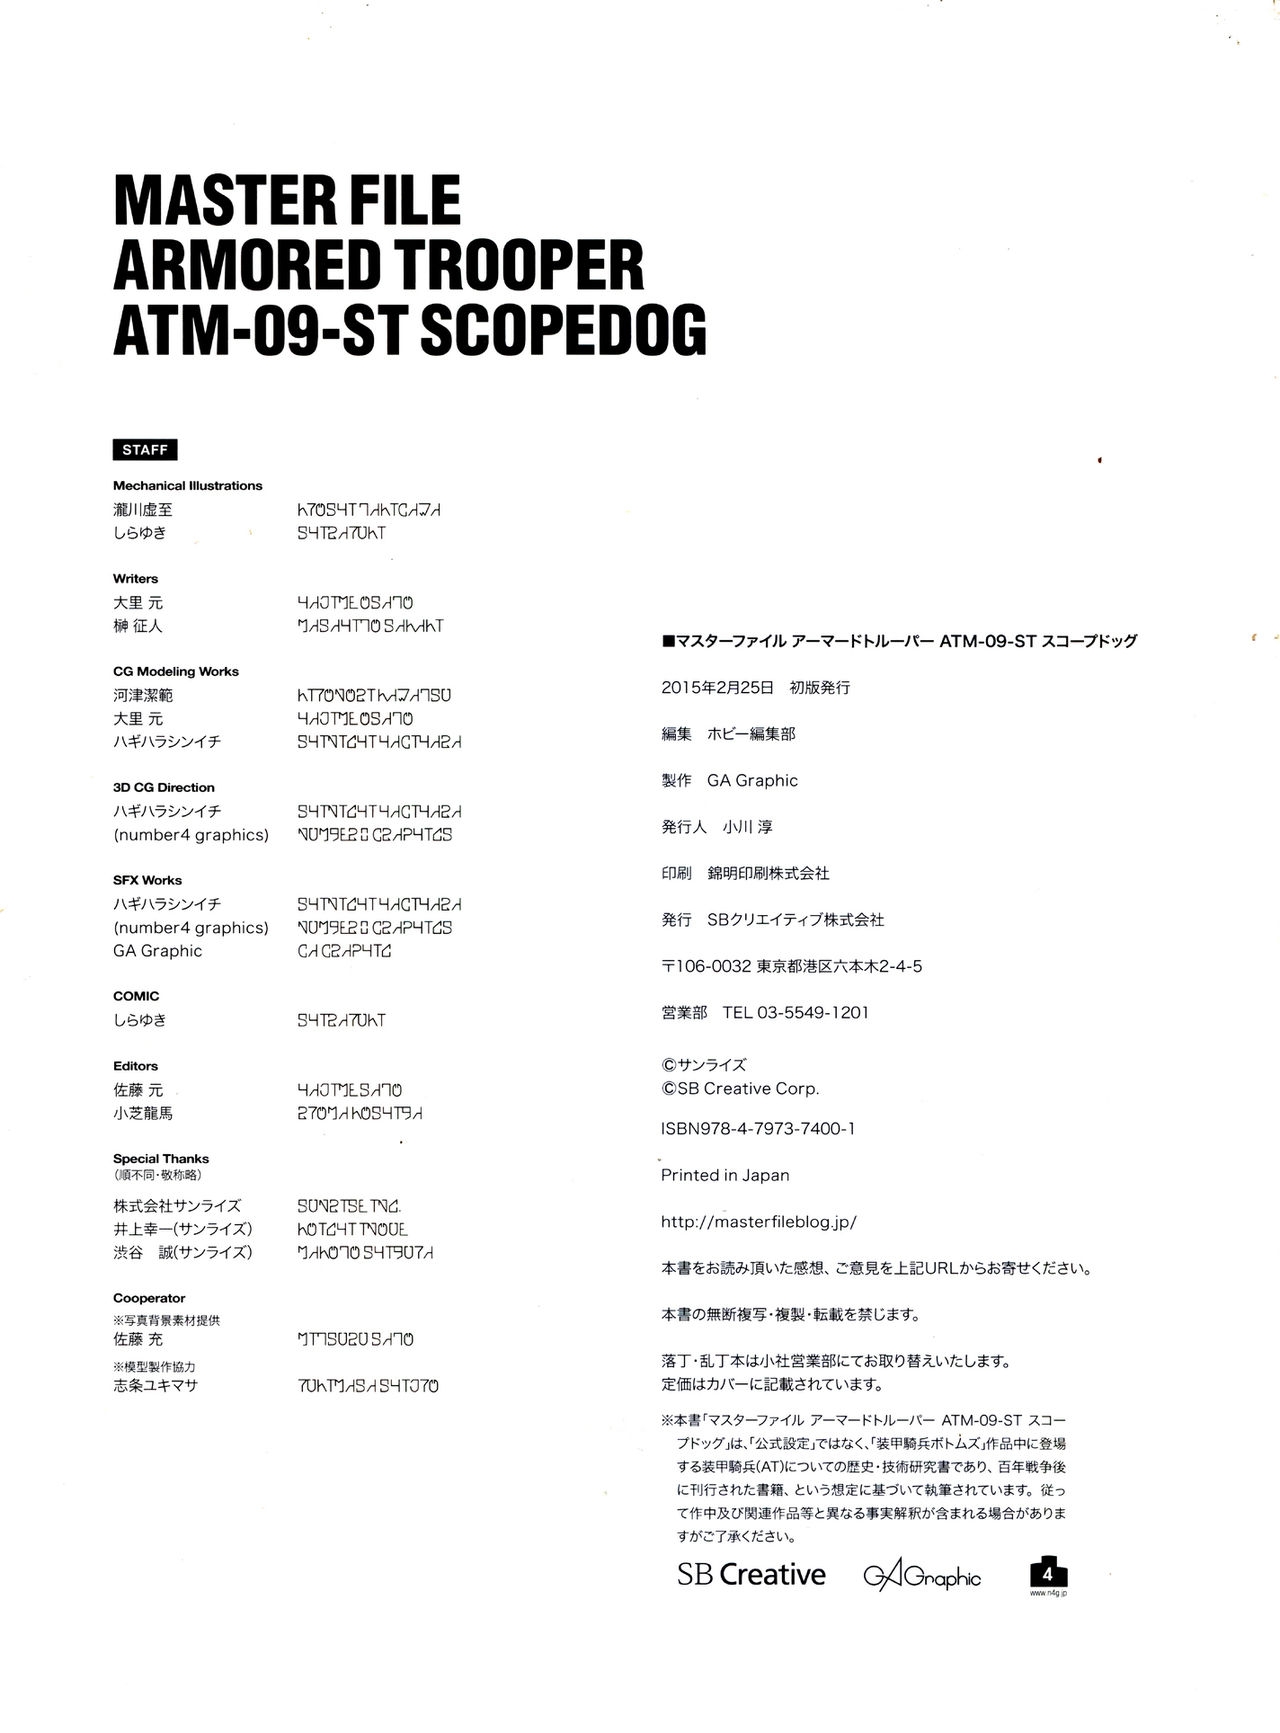 Master File - Armored Trooper AMT-09-ST Scopedog 131